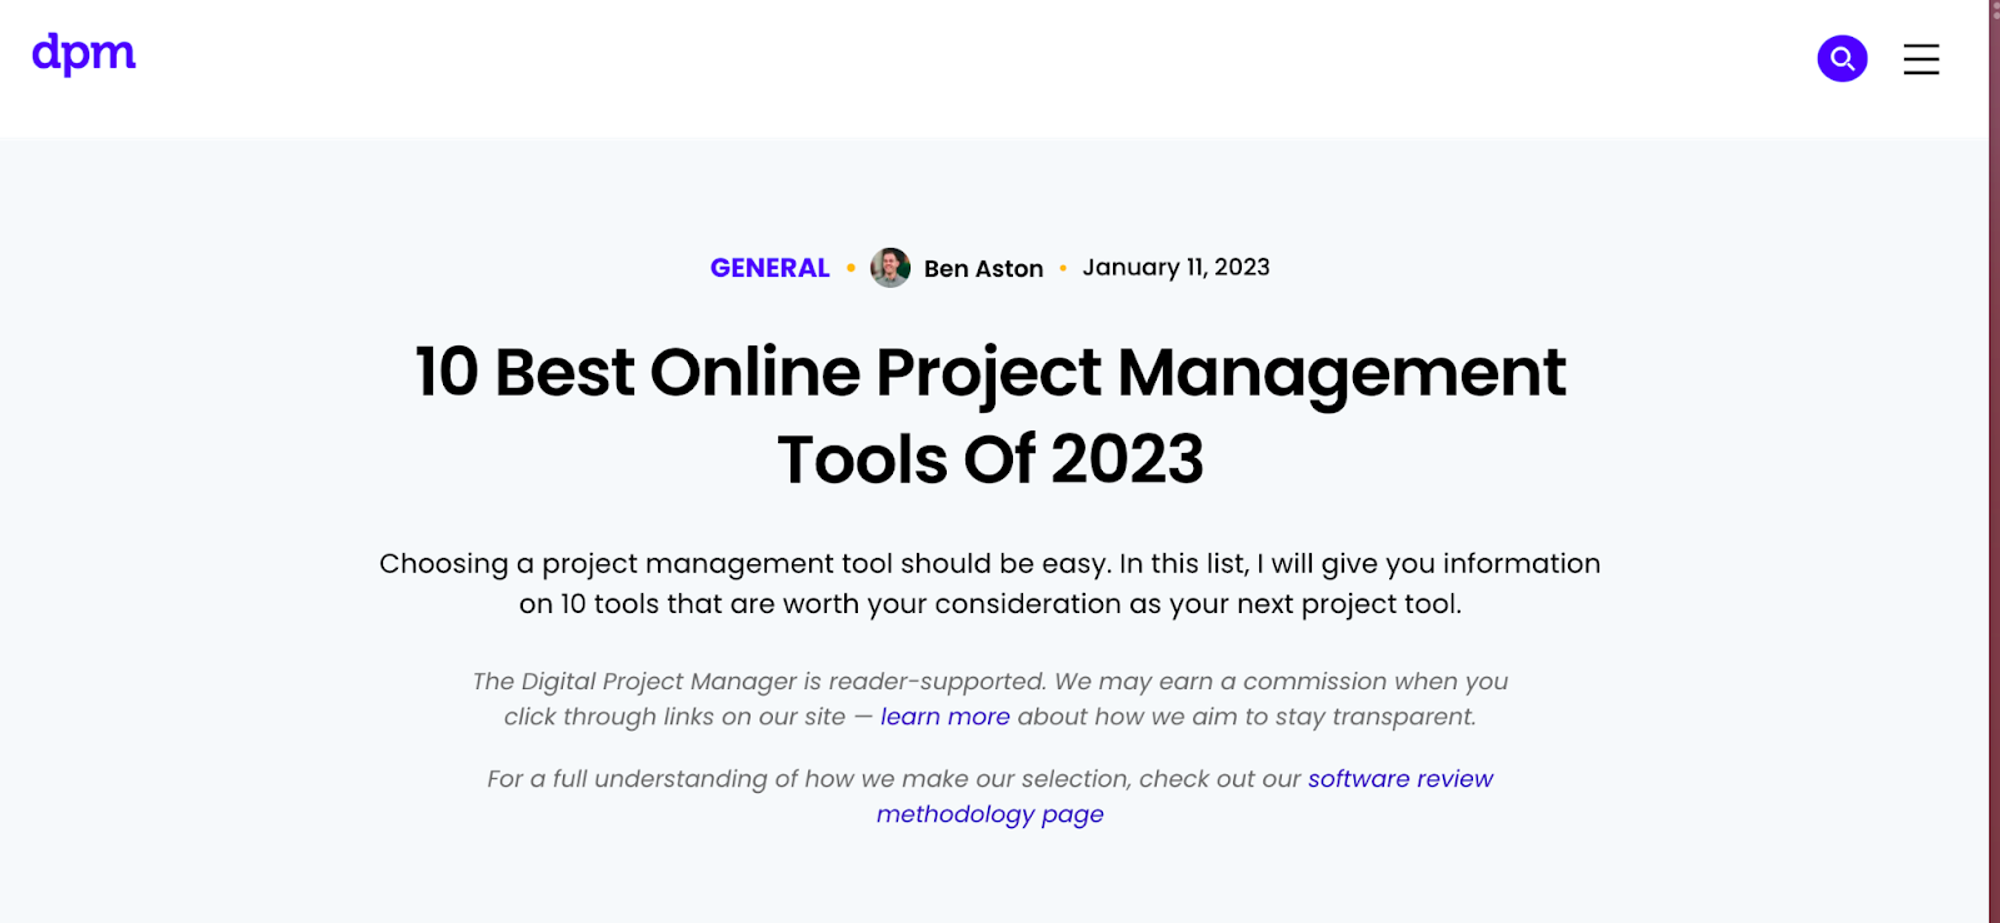 DPM Blog Post - "10 Best Online Project Management Tools Of 2023"